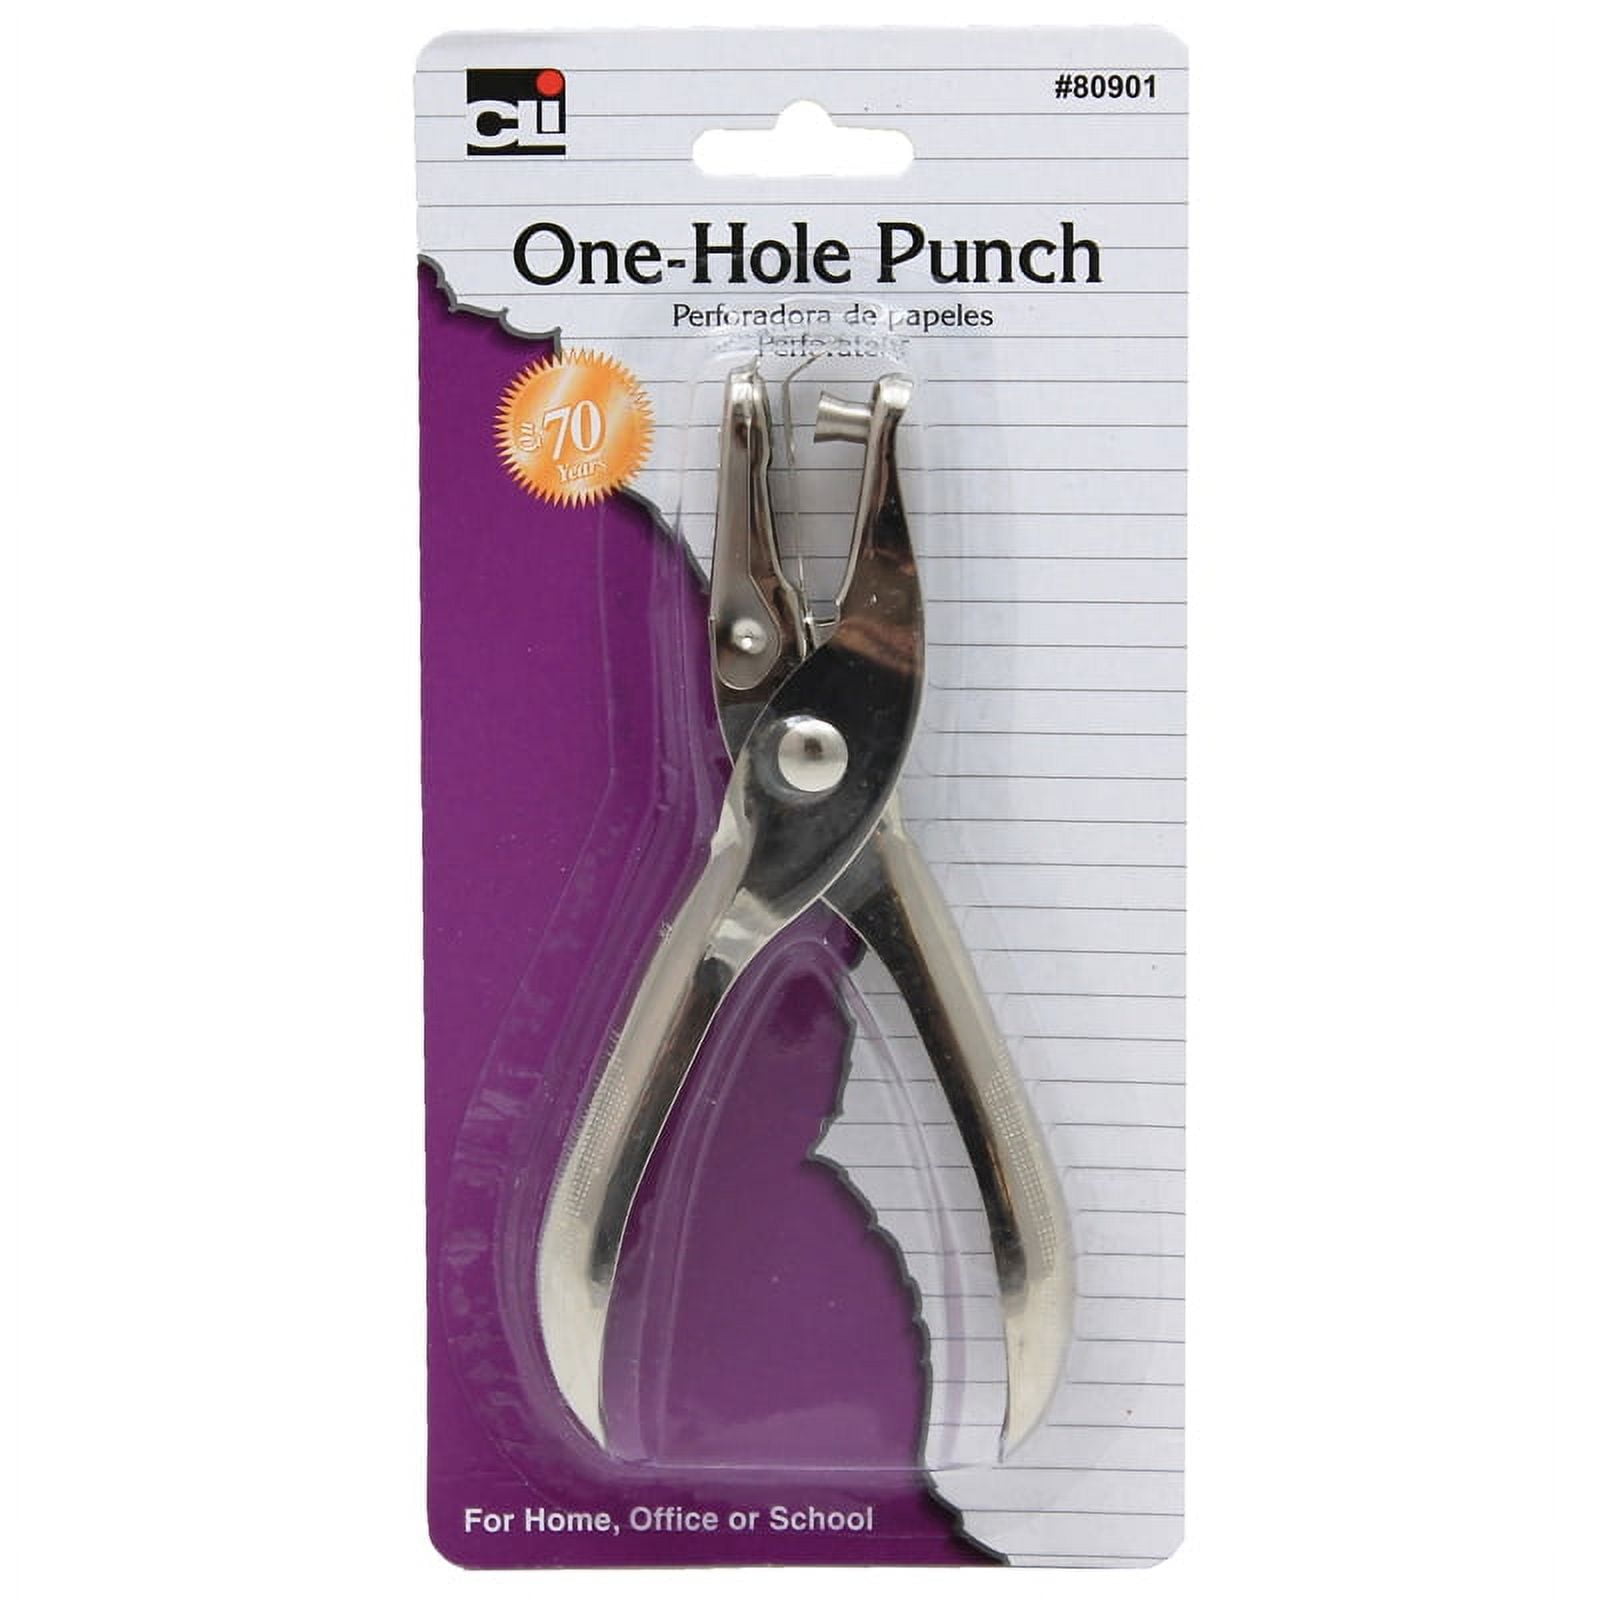 1-Hole Paper Punch w/metal catcher - CHL90001, Charles Leonard